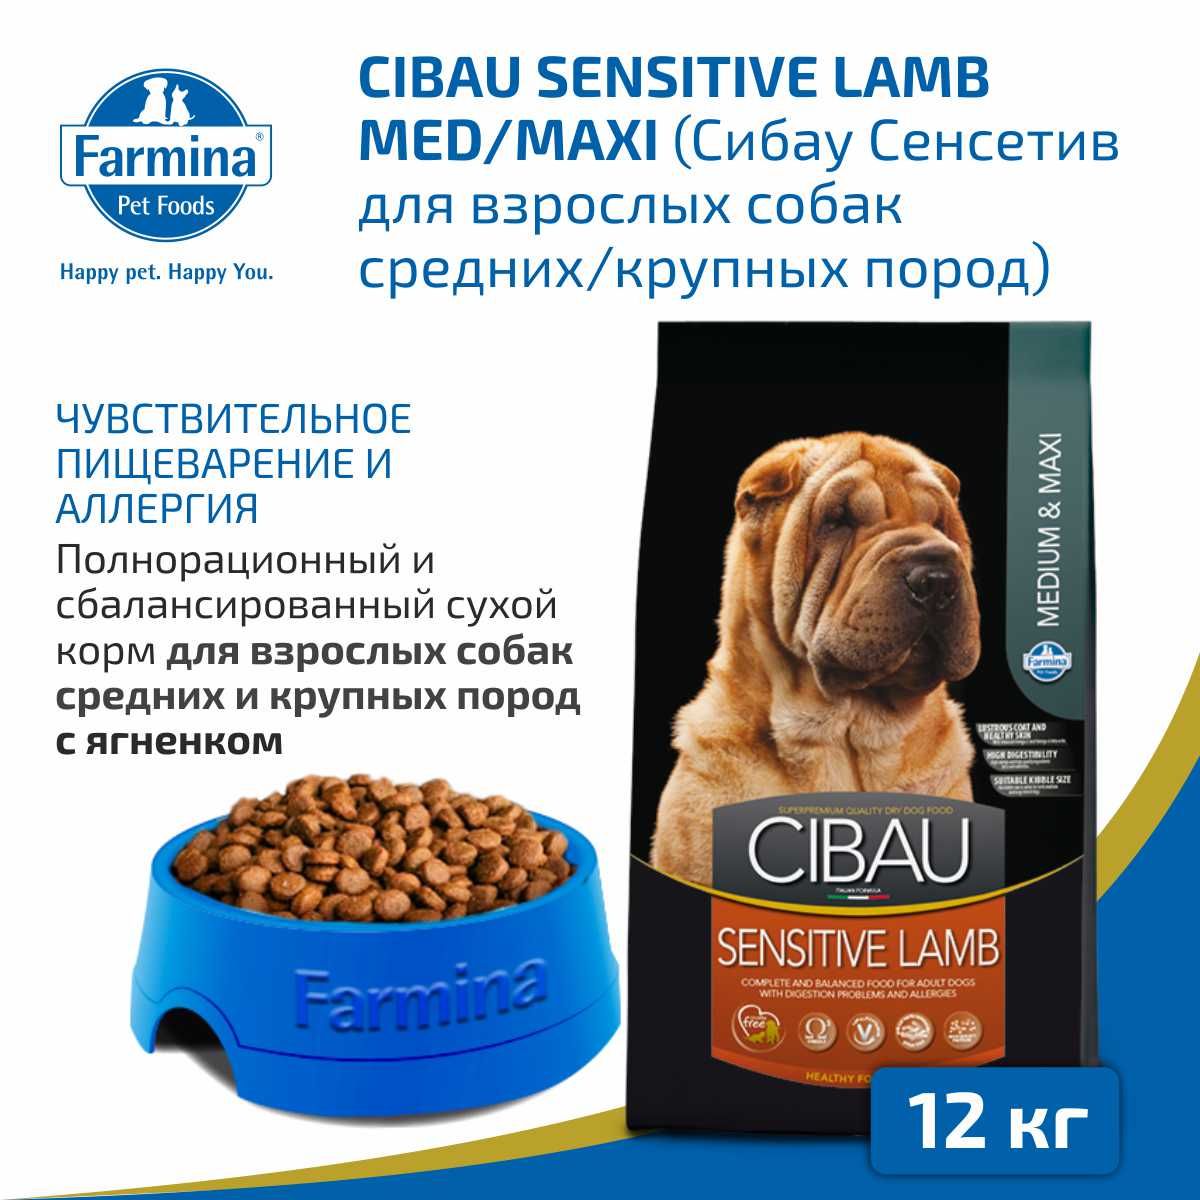 Корм для собак cibau. Farmina Cibau sensitive Lamb Medium & Maxi корм для собак. Корм для собак Cibau Fish. Корм для собак Cibau 800гр с ягненком мина. Чибау корм для собак с рыбой.